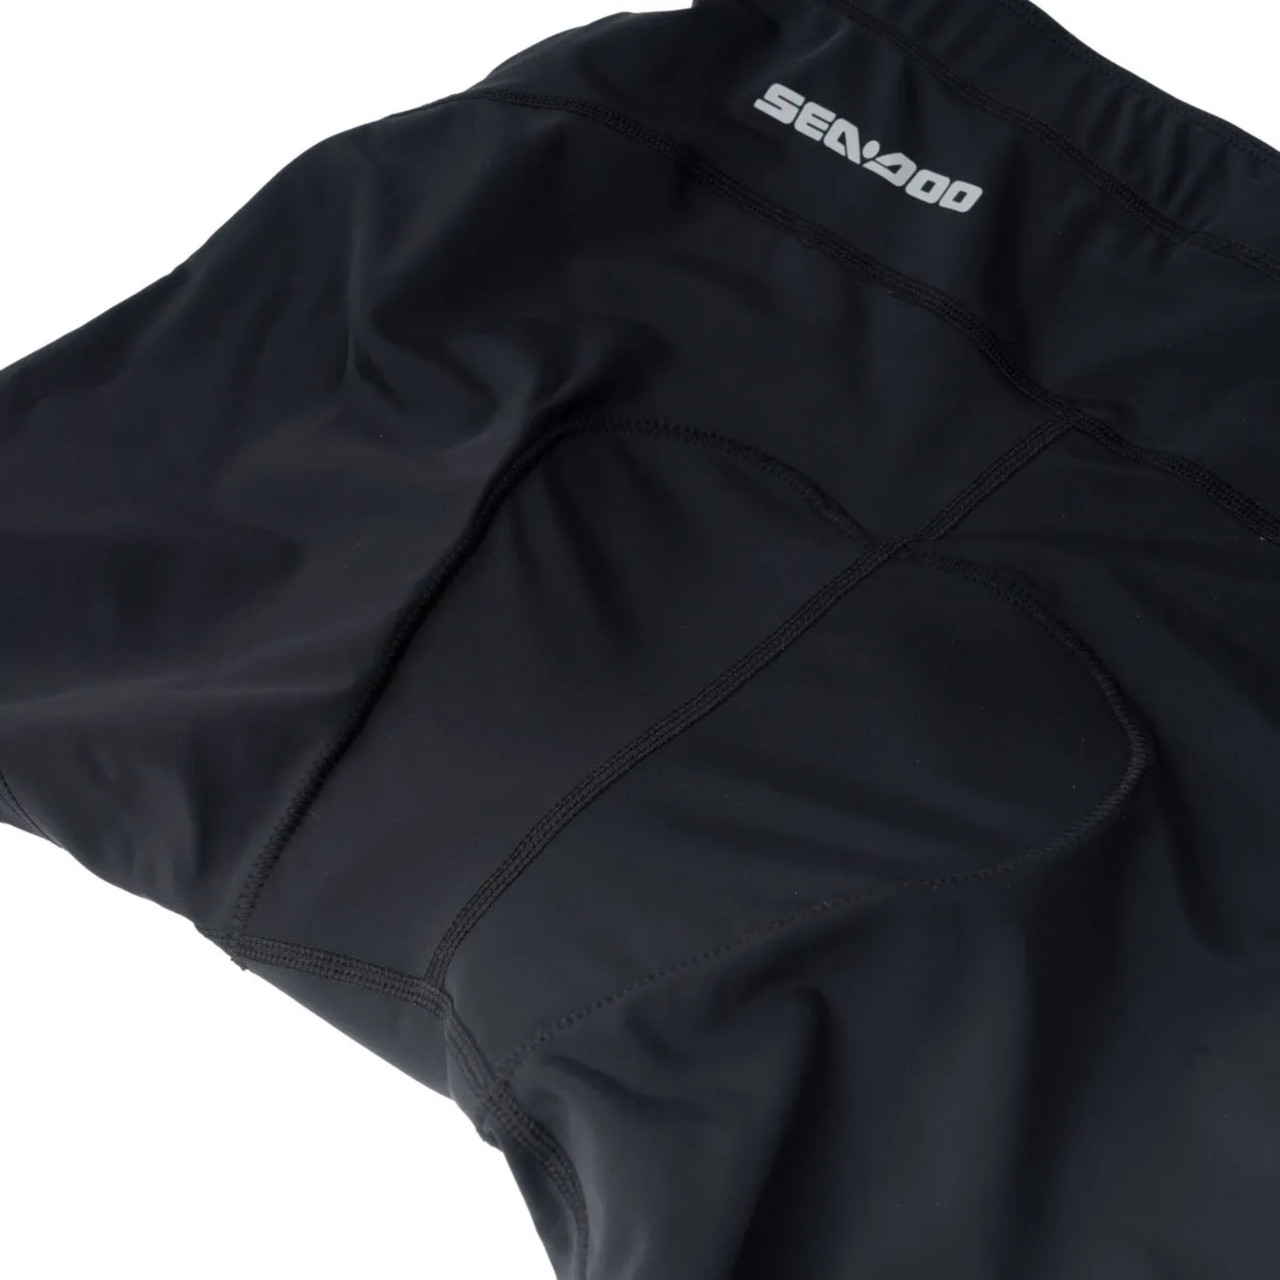 Sea-Doo New OEM Women's X-Large Protective Riding Shorts, 2867991290